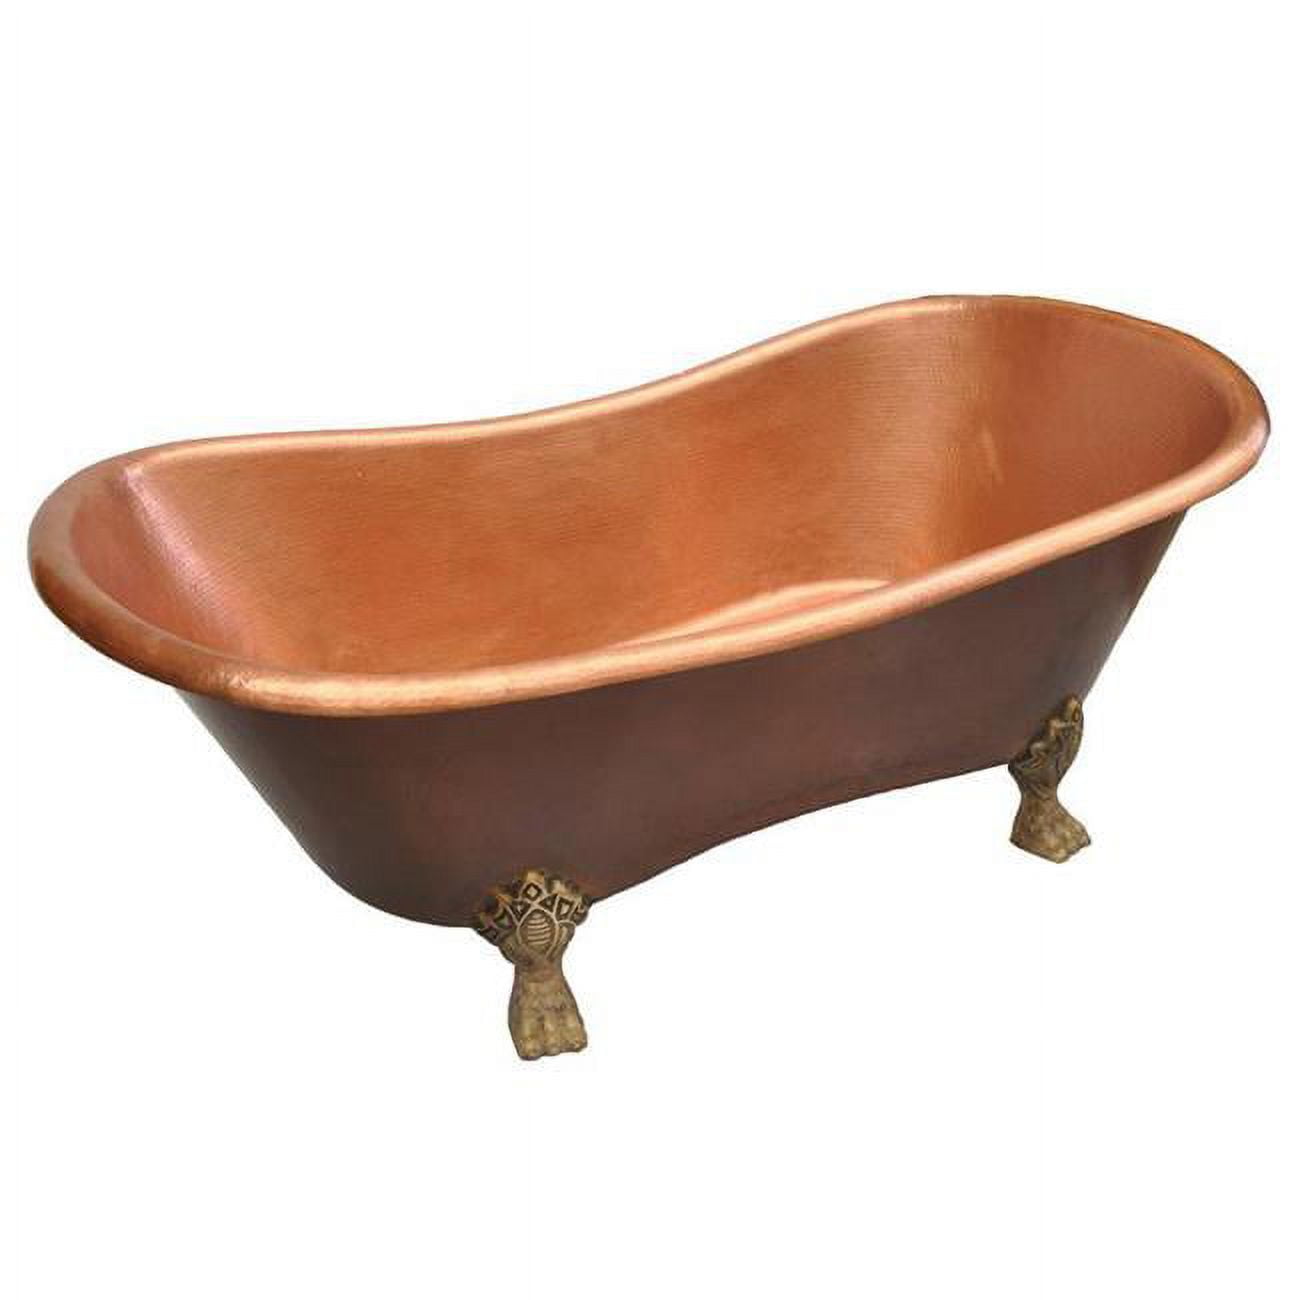 Cbt-at-66-db Copper Bath Tub Antique Design, Dark Brown - Medium - 32 X 32 X 66 In.